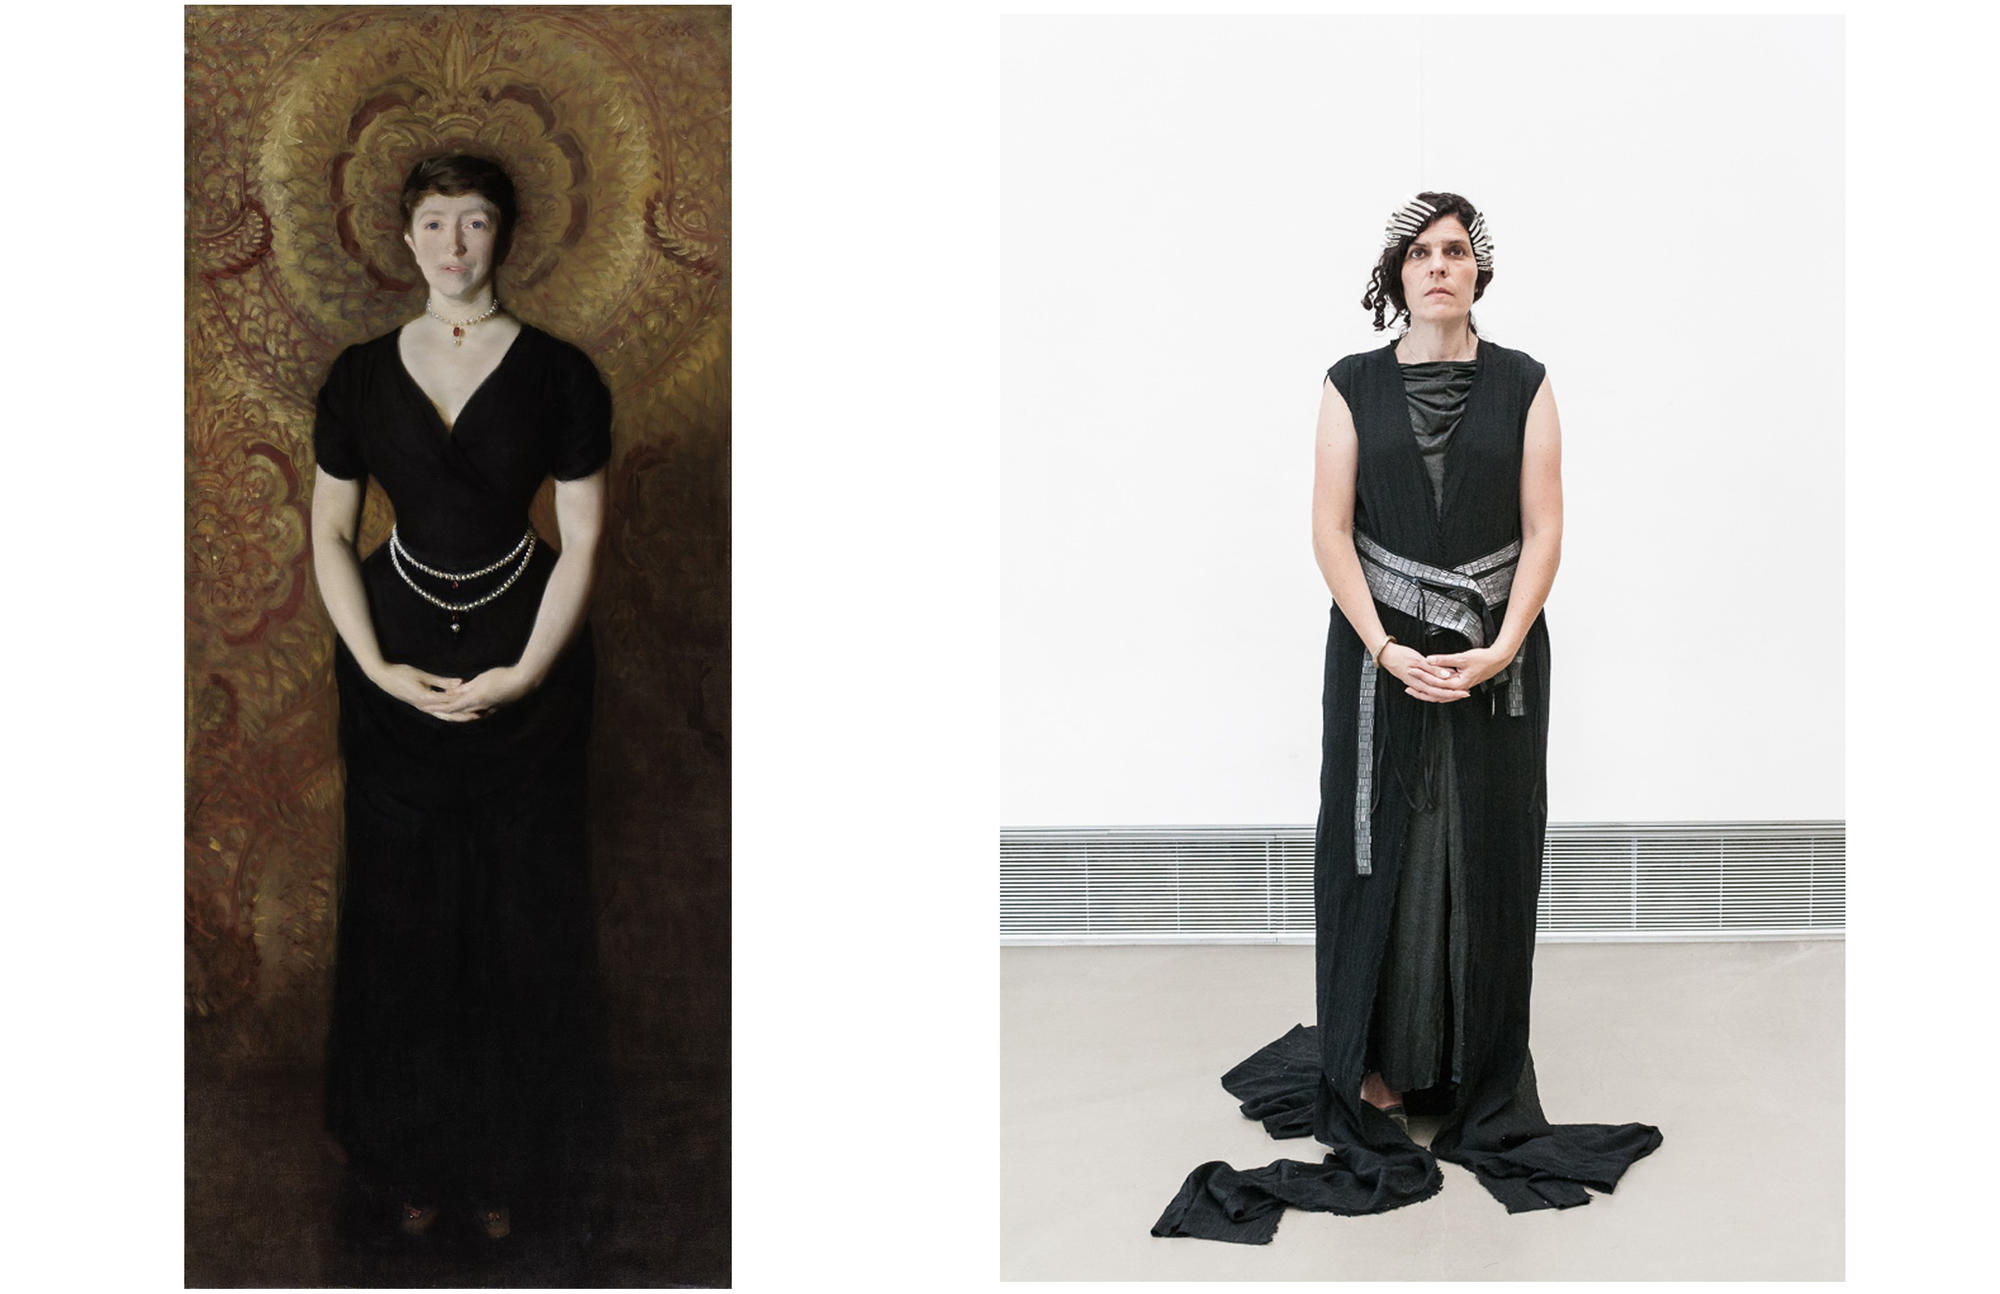 Photo Panel: Isabella Stewart Gardner by John Singer Sargent, 1888 / Dyan McClimon Miller by Mike Zaia, 2017. Garment by Christian Restrepo, 2017.